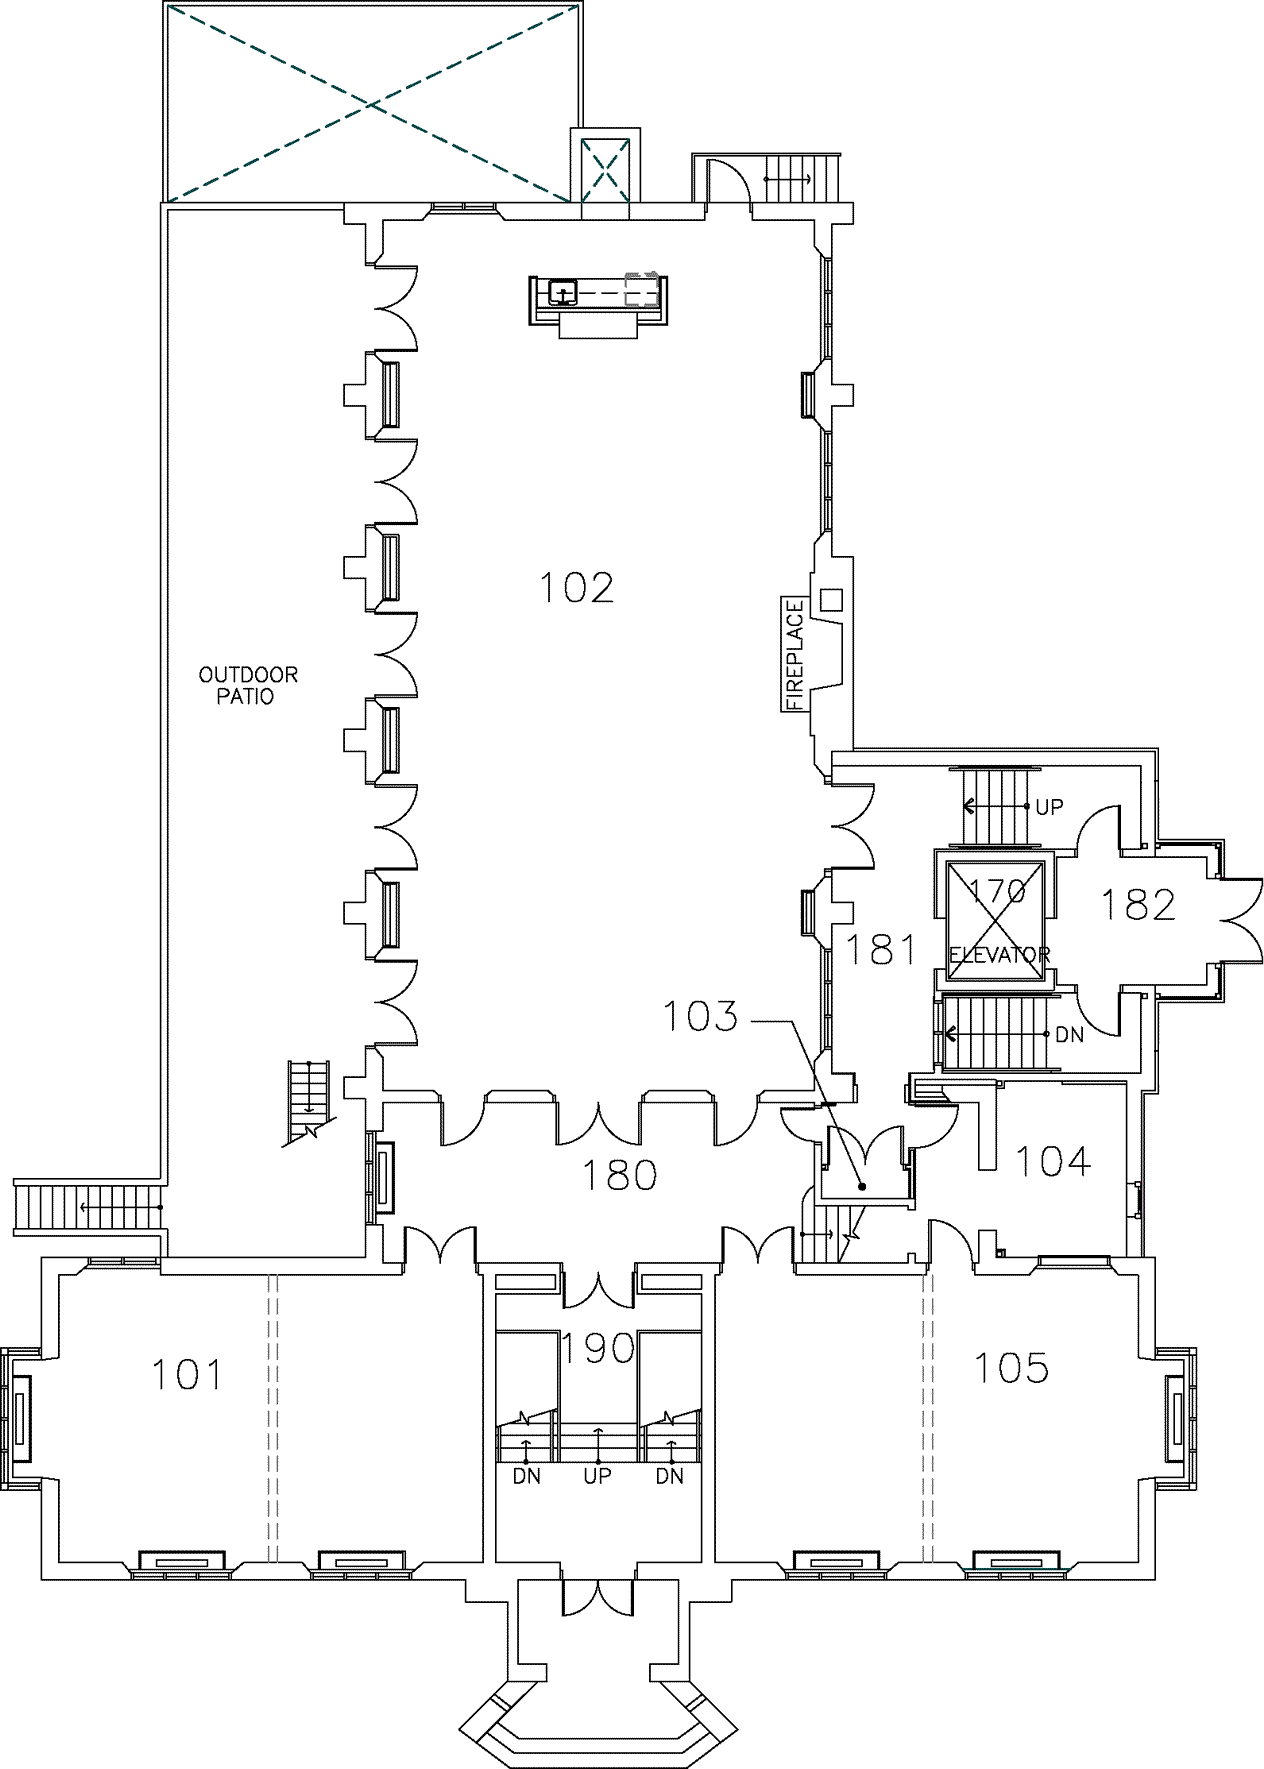 McMaster University Alumni Memorial Building (AMB) - First Floor Map